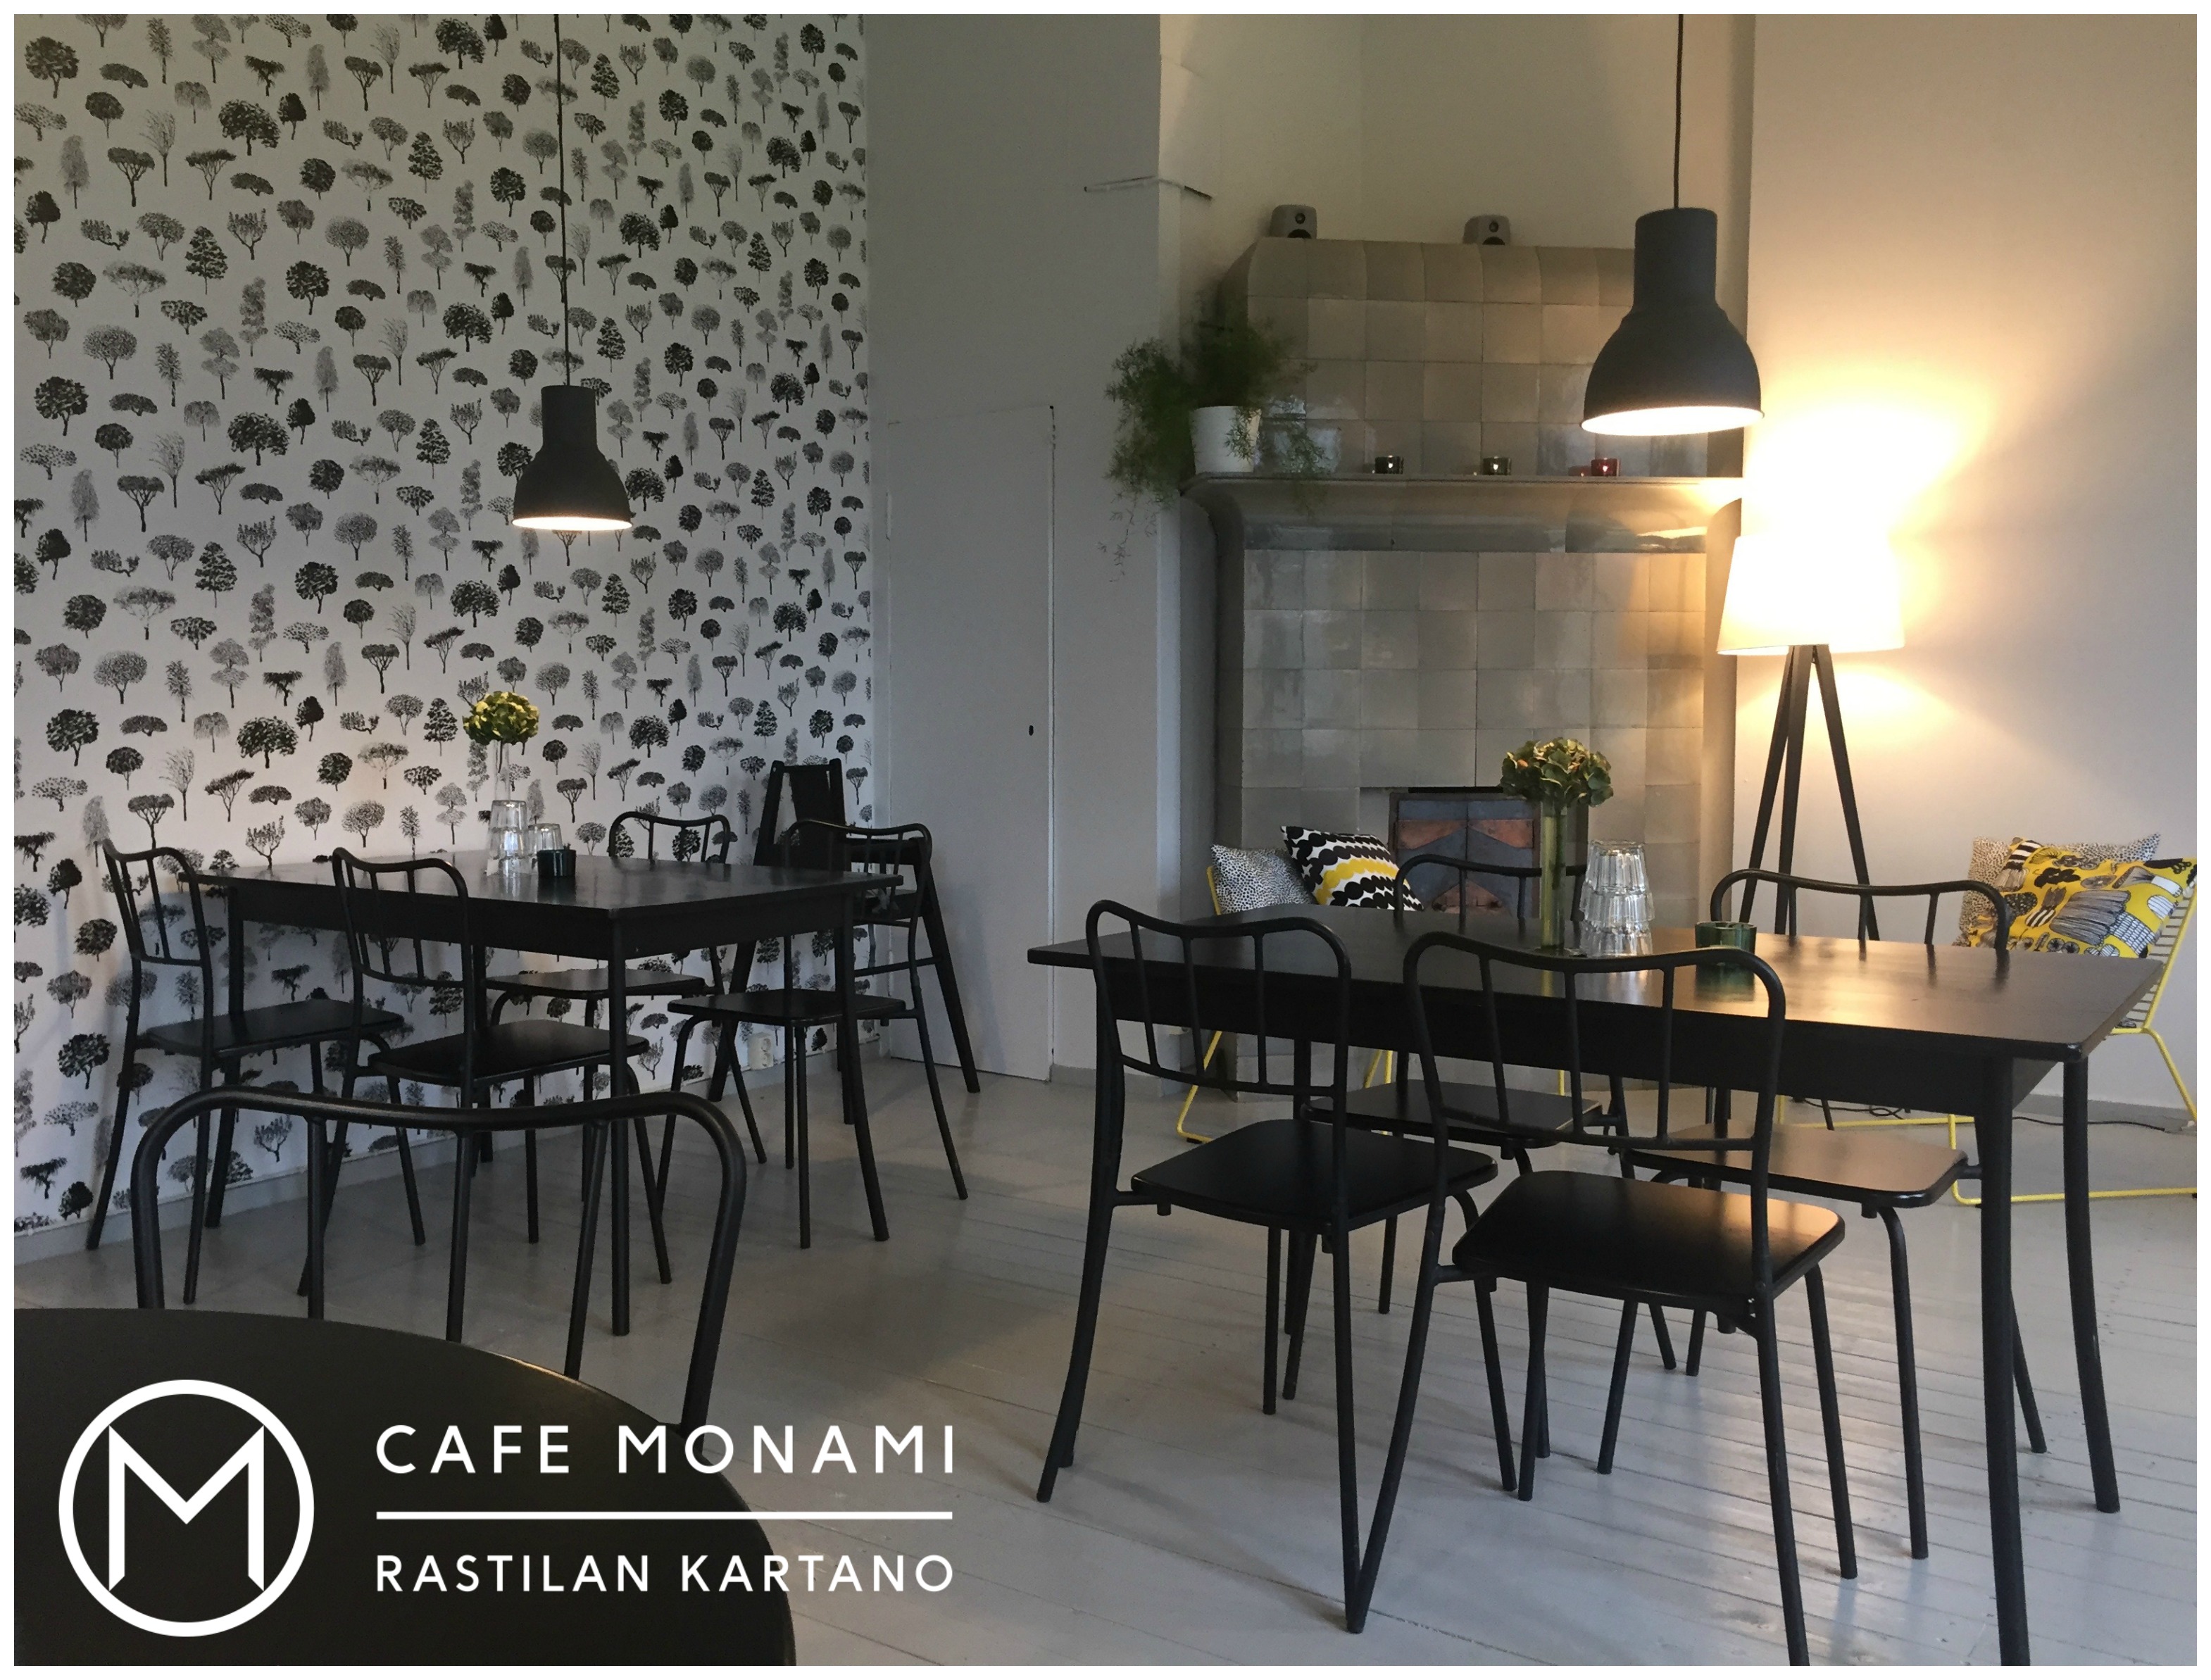 Café Monami Rastilan Kartano kokemuksia - Upea designravintola Helsingissä 